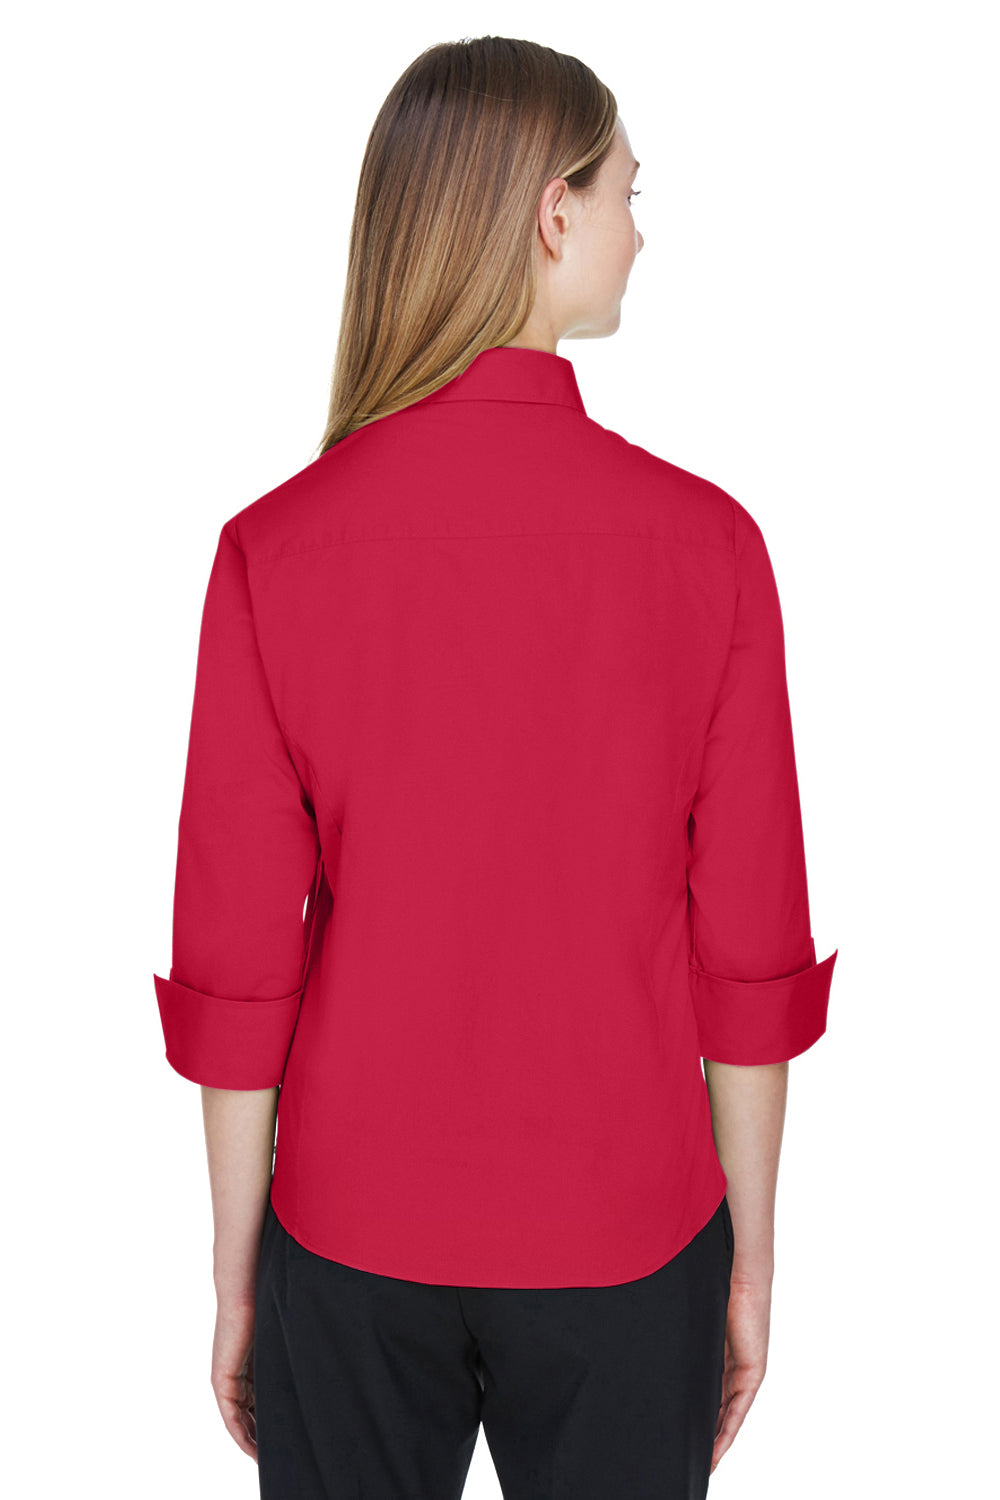 Devon & Jones DP625W Womens Perfect Fit 3/4 Sleeve Button Down Shirt Red Back